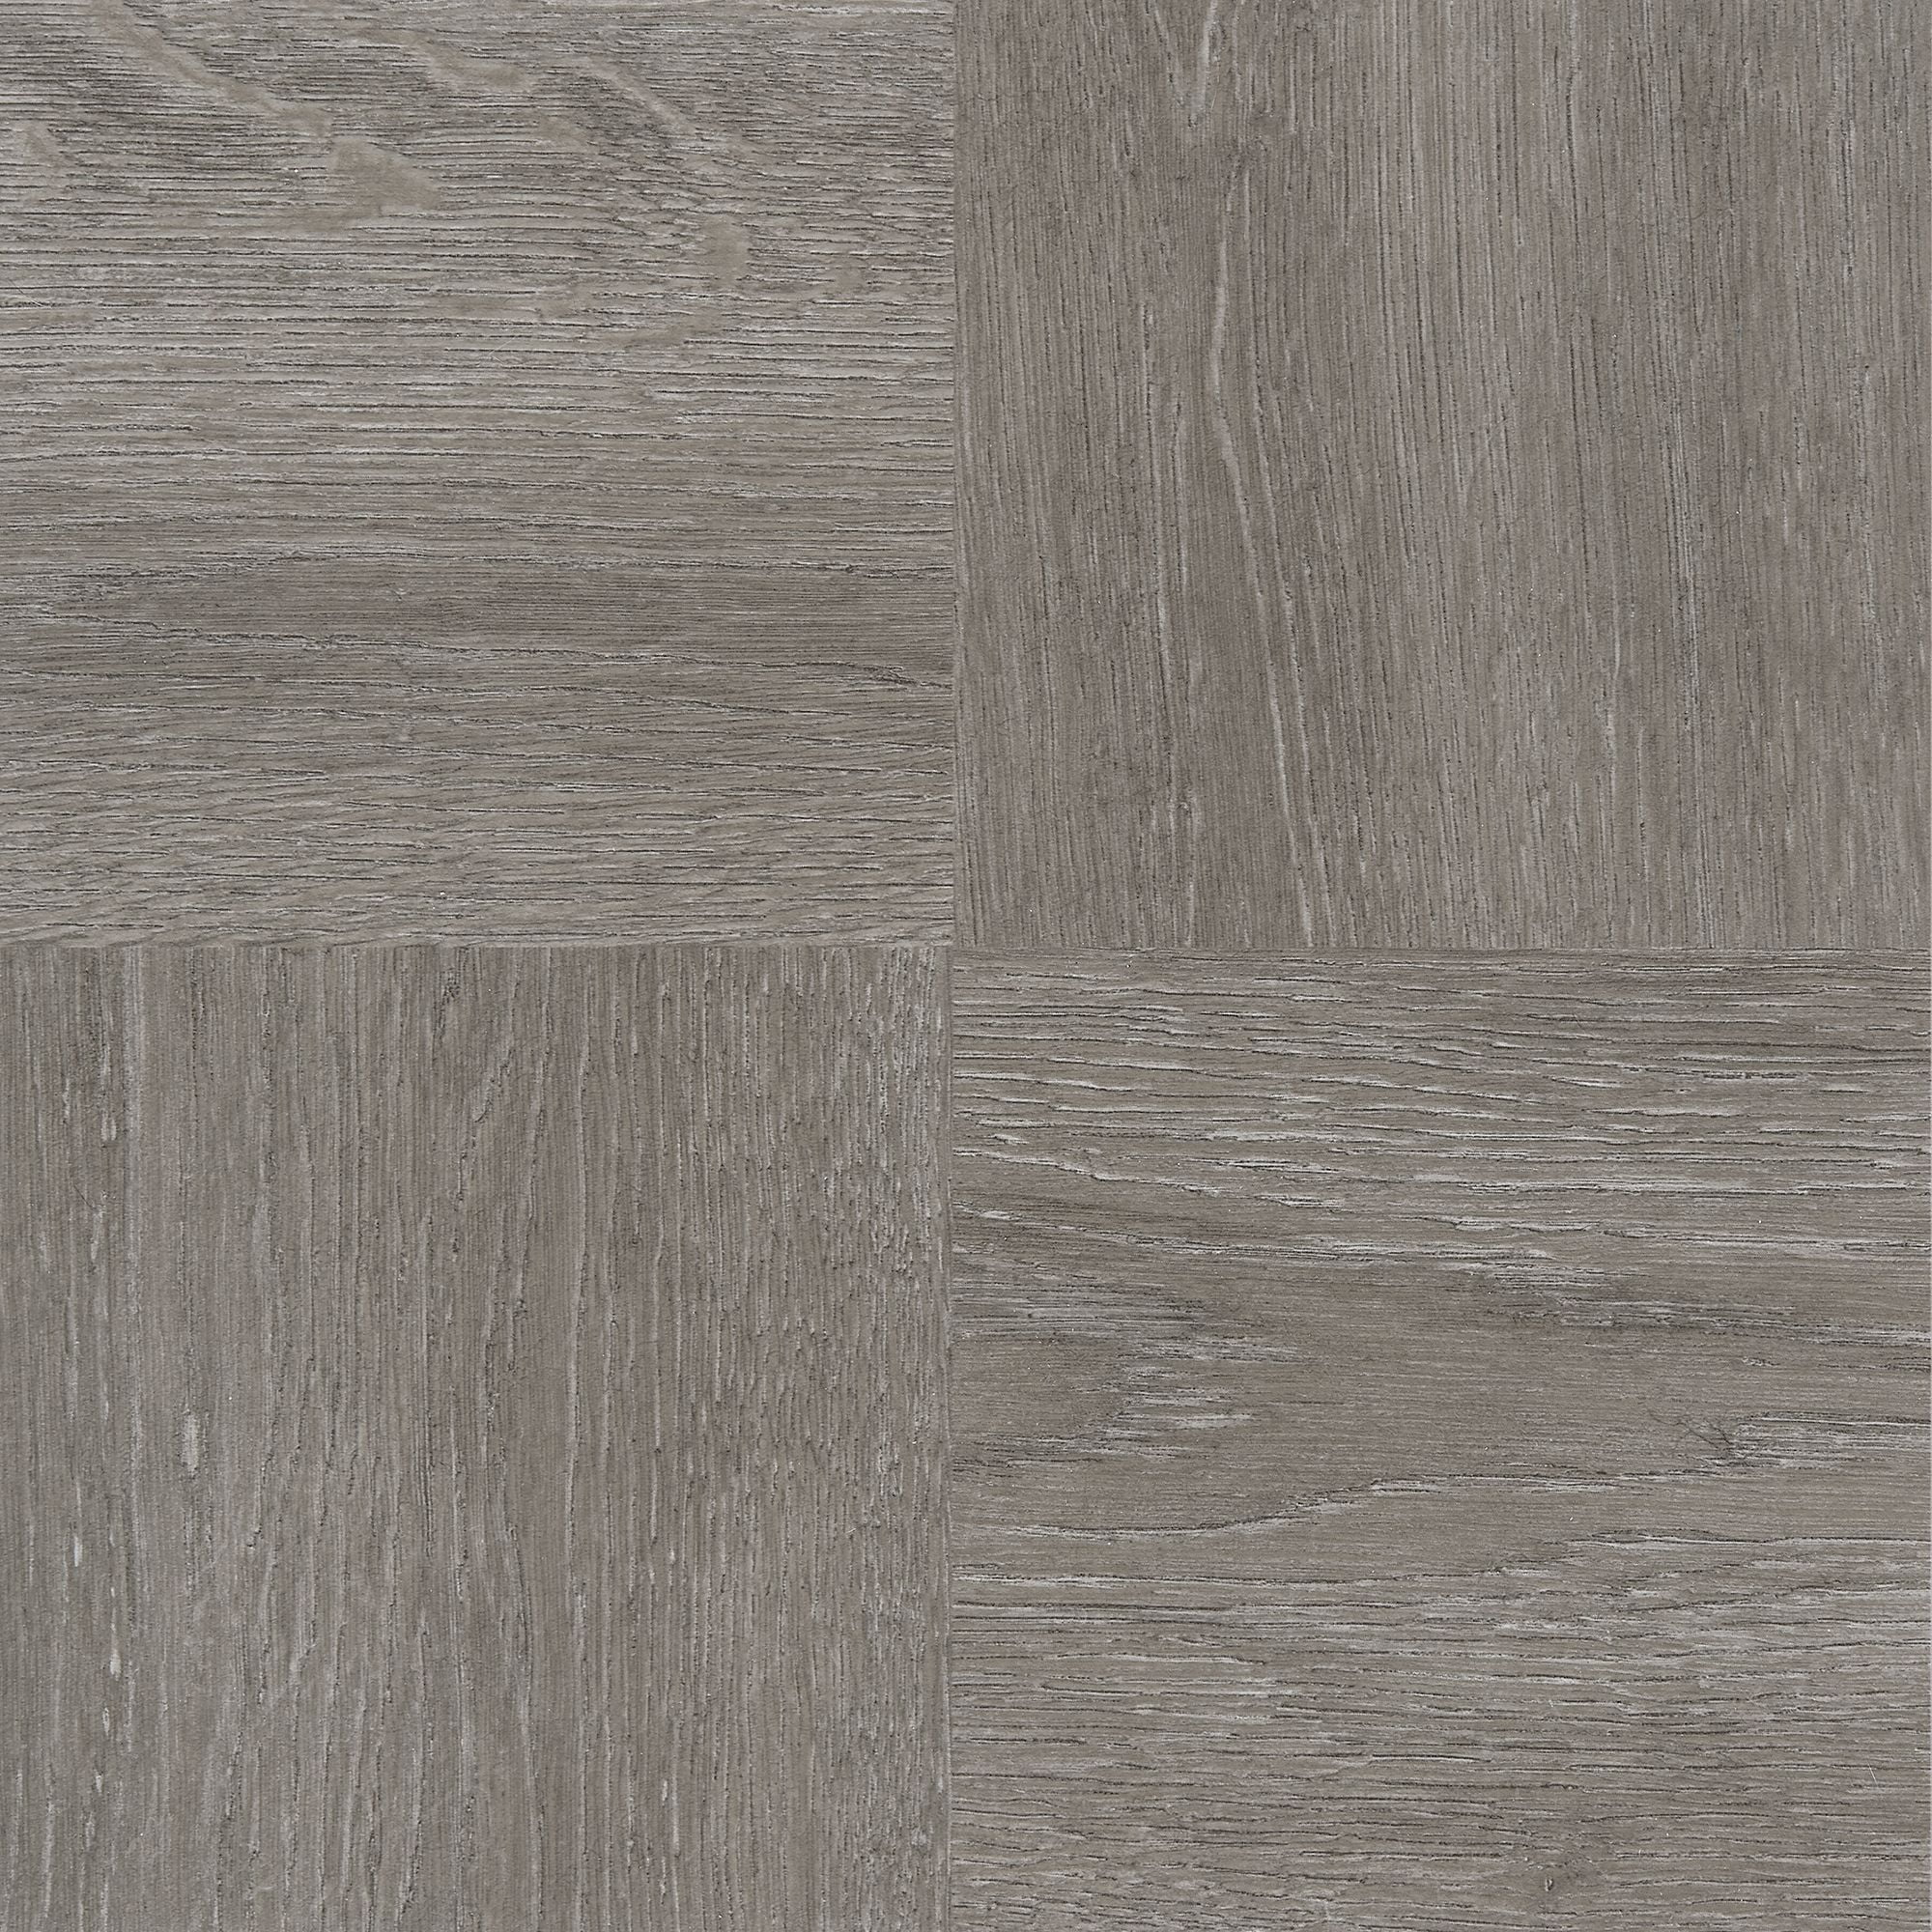 Stick Vinyl Floor Tiles 20, Grey Plank Tile Flooring